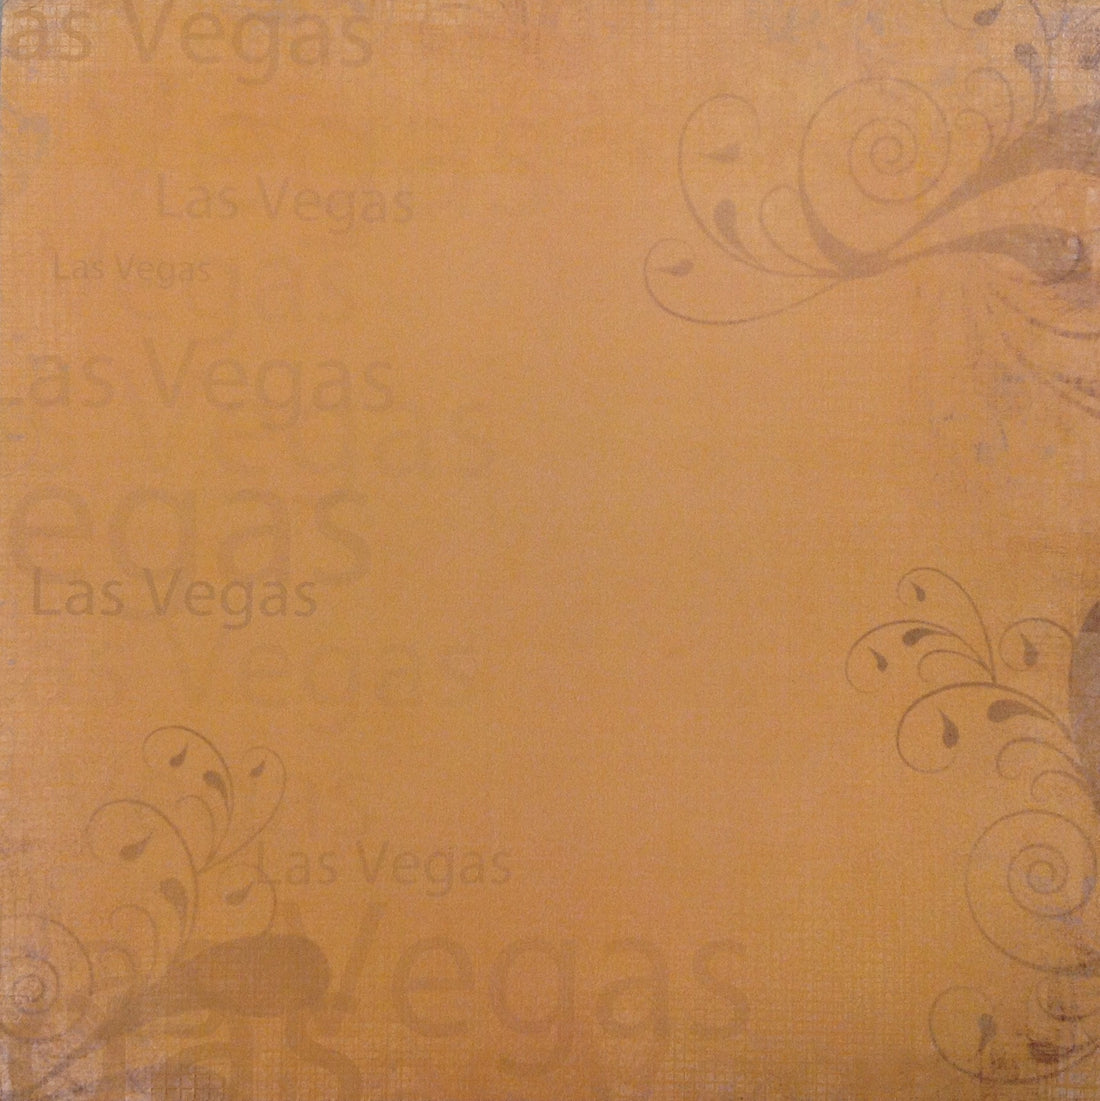 LAS VEGAS School Grunge Yellow 12&quot;X12&quot; Custom Travel Paper Sheet LV - Scrapbook Kyandyland